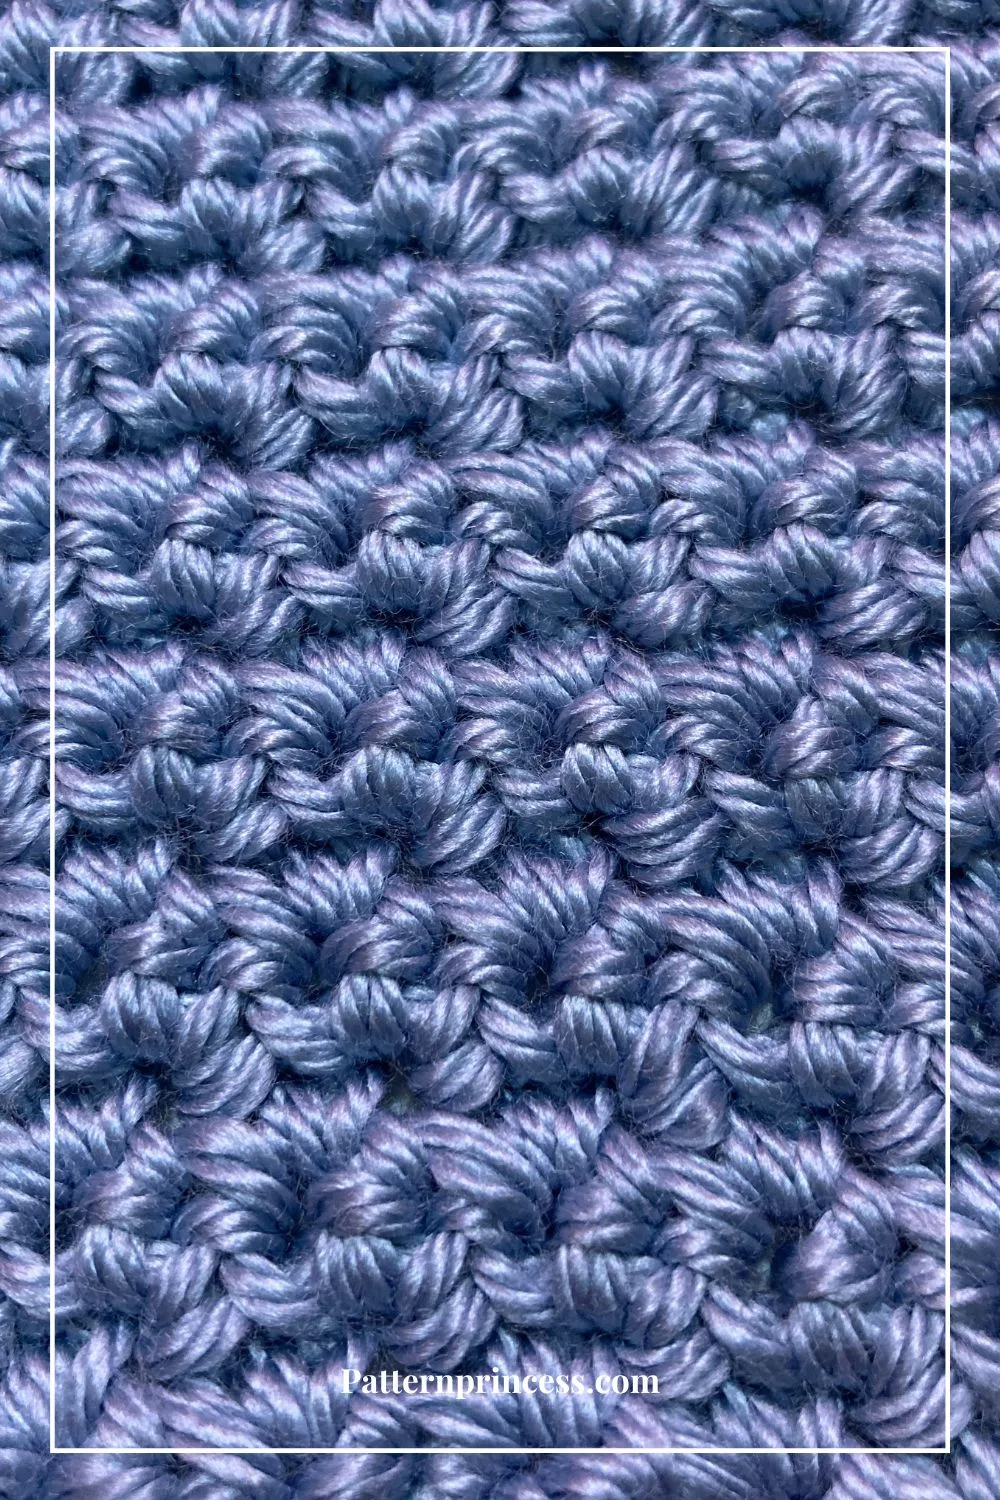 Beginner Crochet Stitch